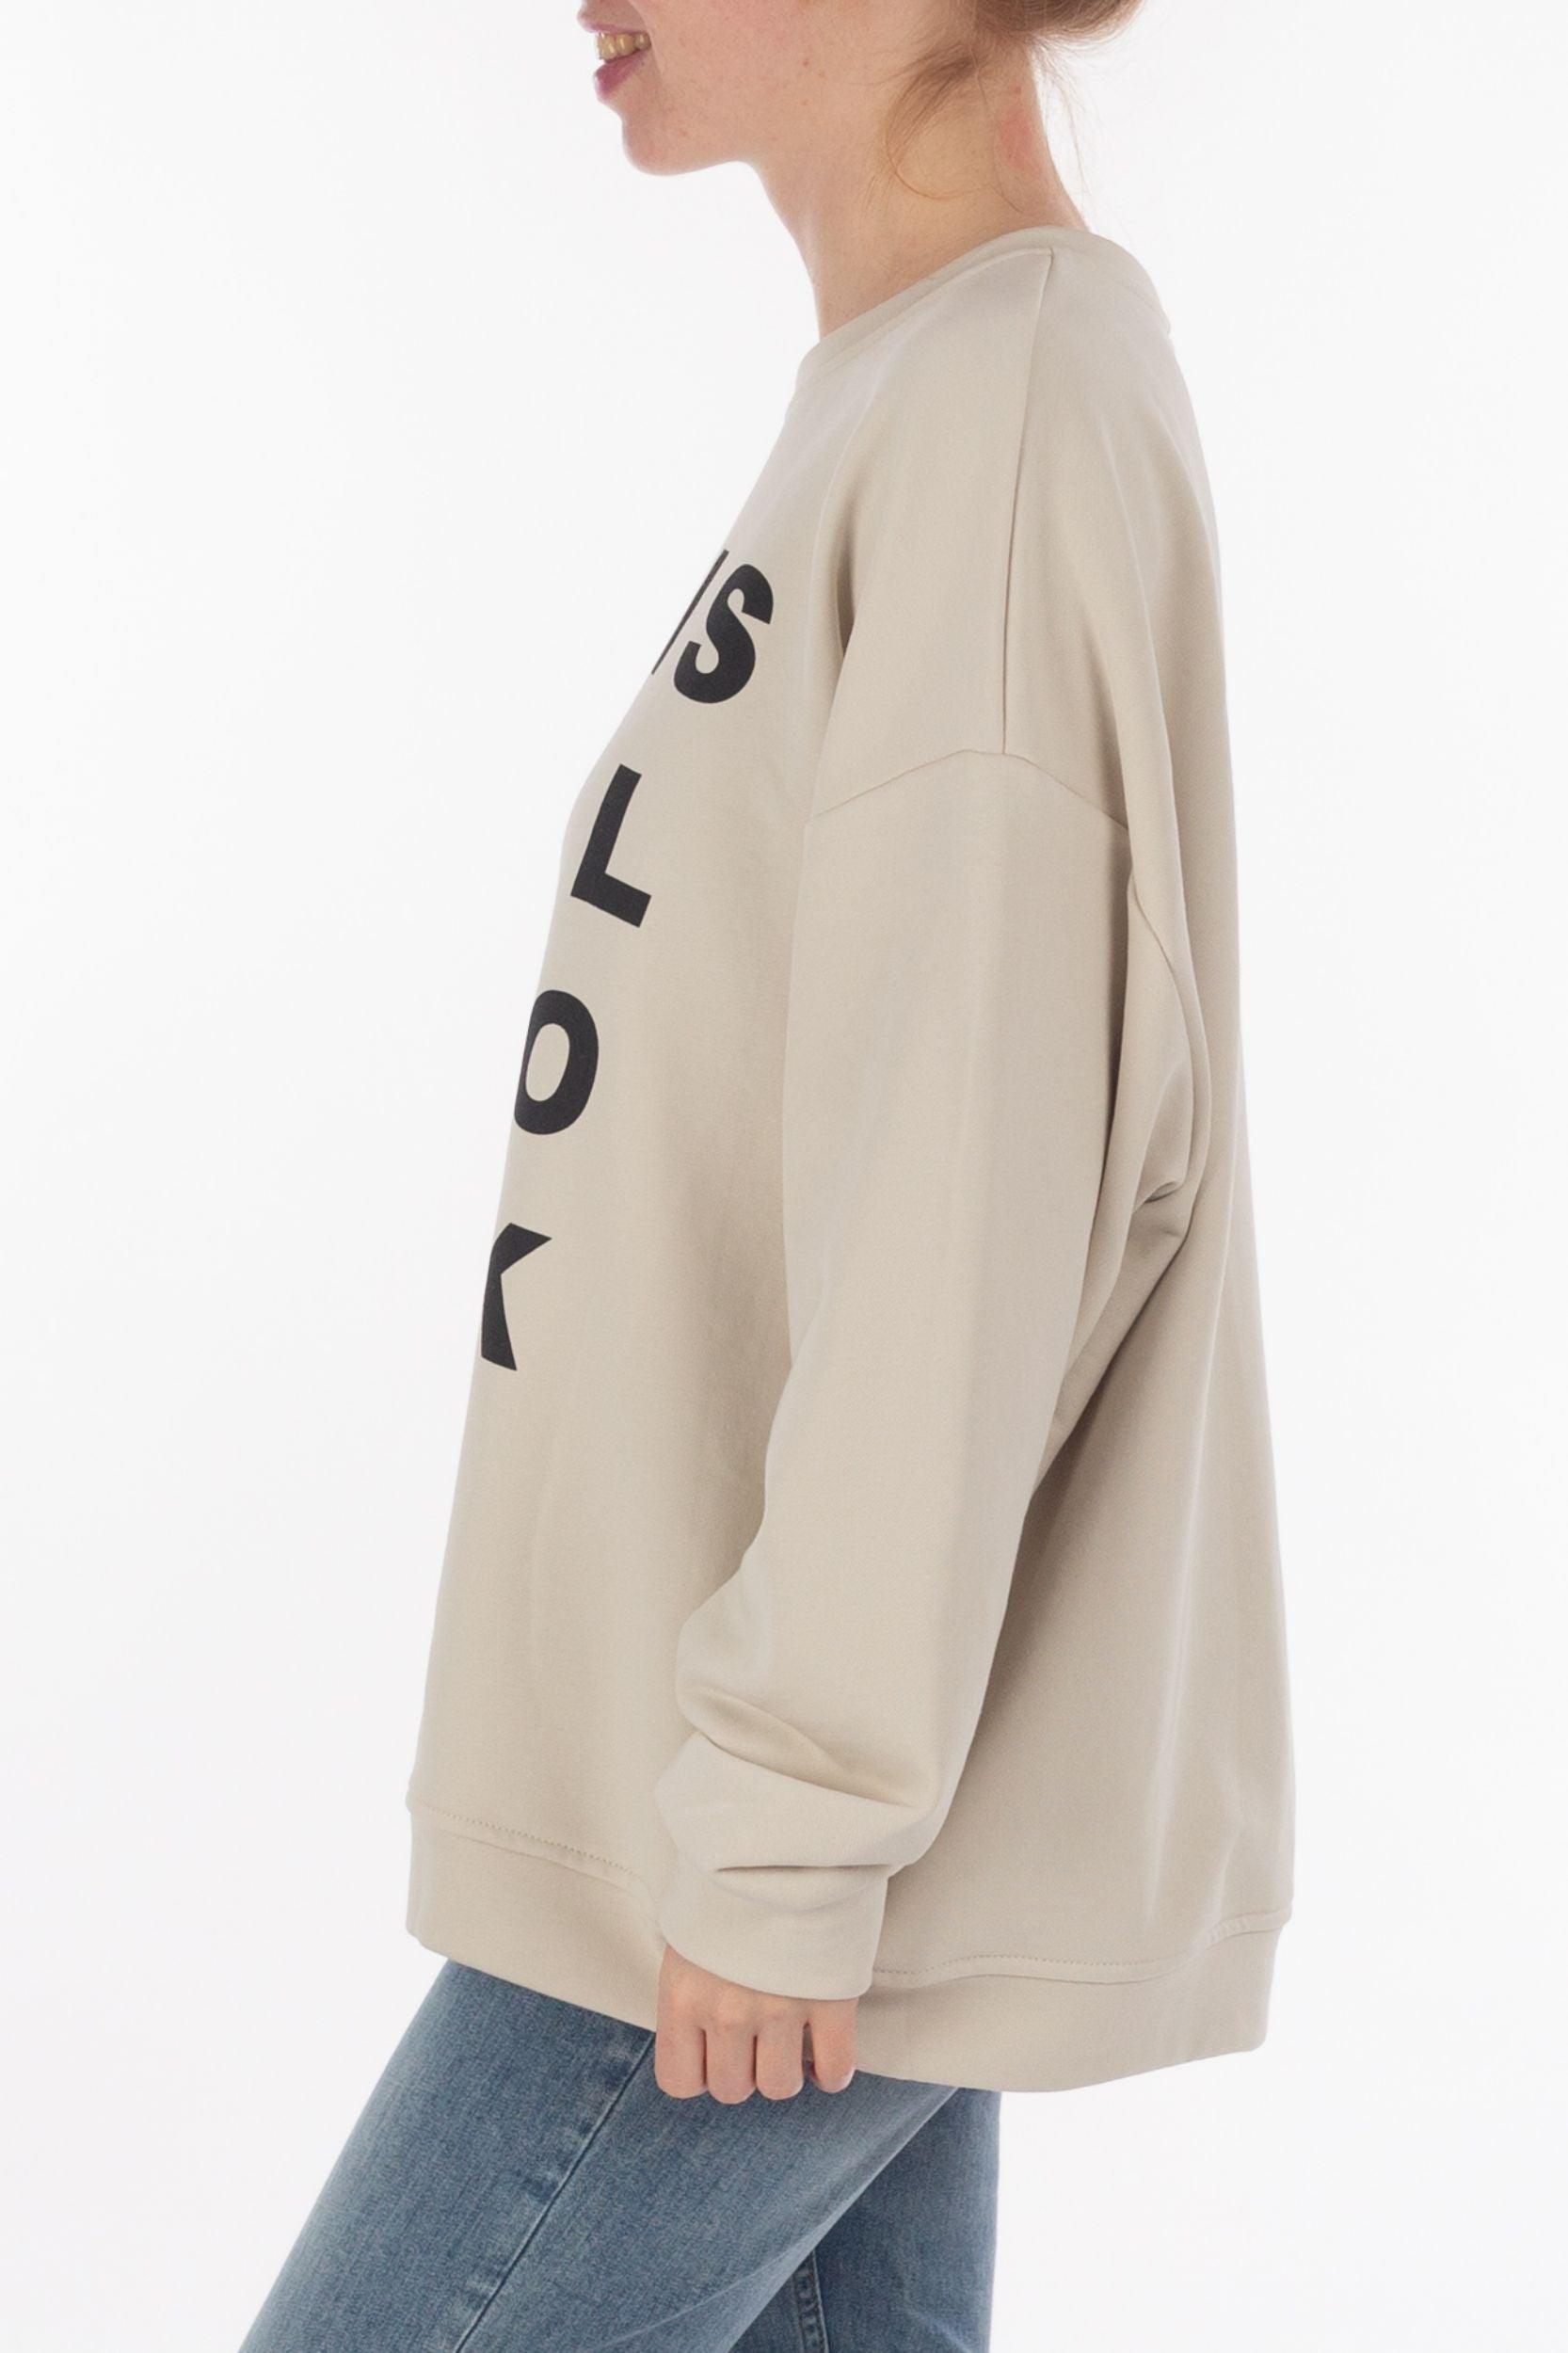 Sweatshirt mit Print - La Strada